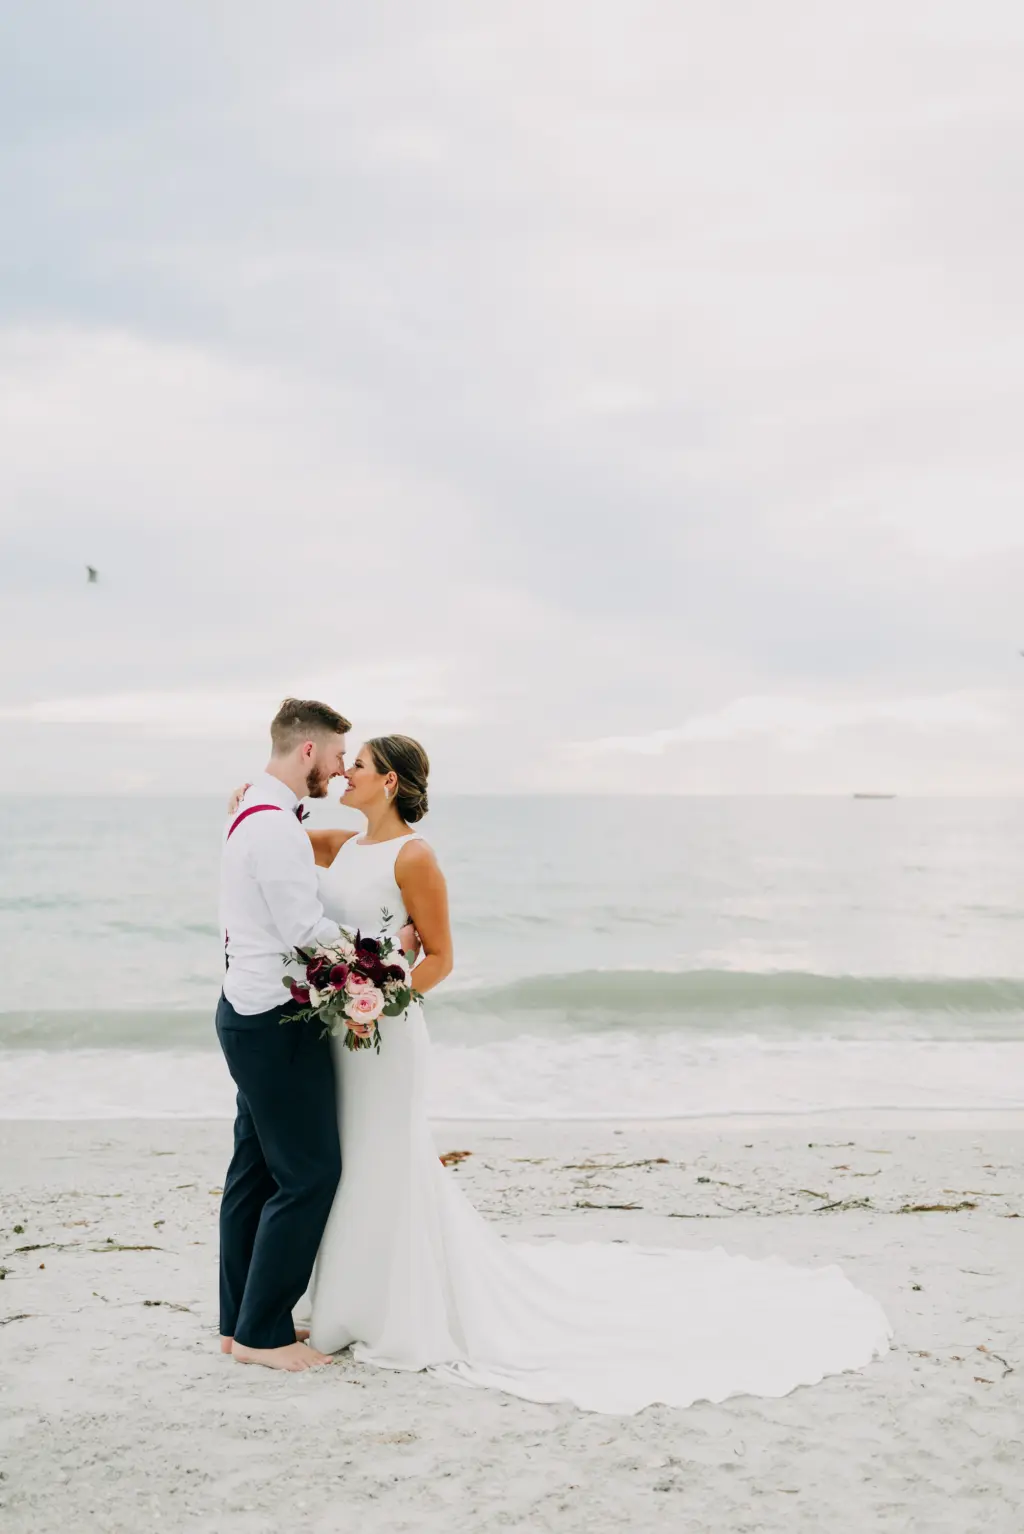 Bride and Groom Fall Elopement Beach Wedding Portrait | Florida Photographer Amber McWhorter Photography